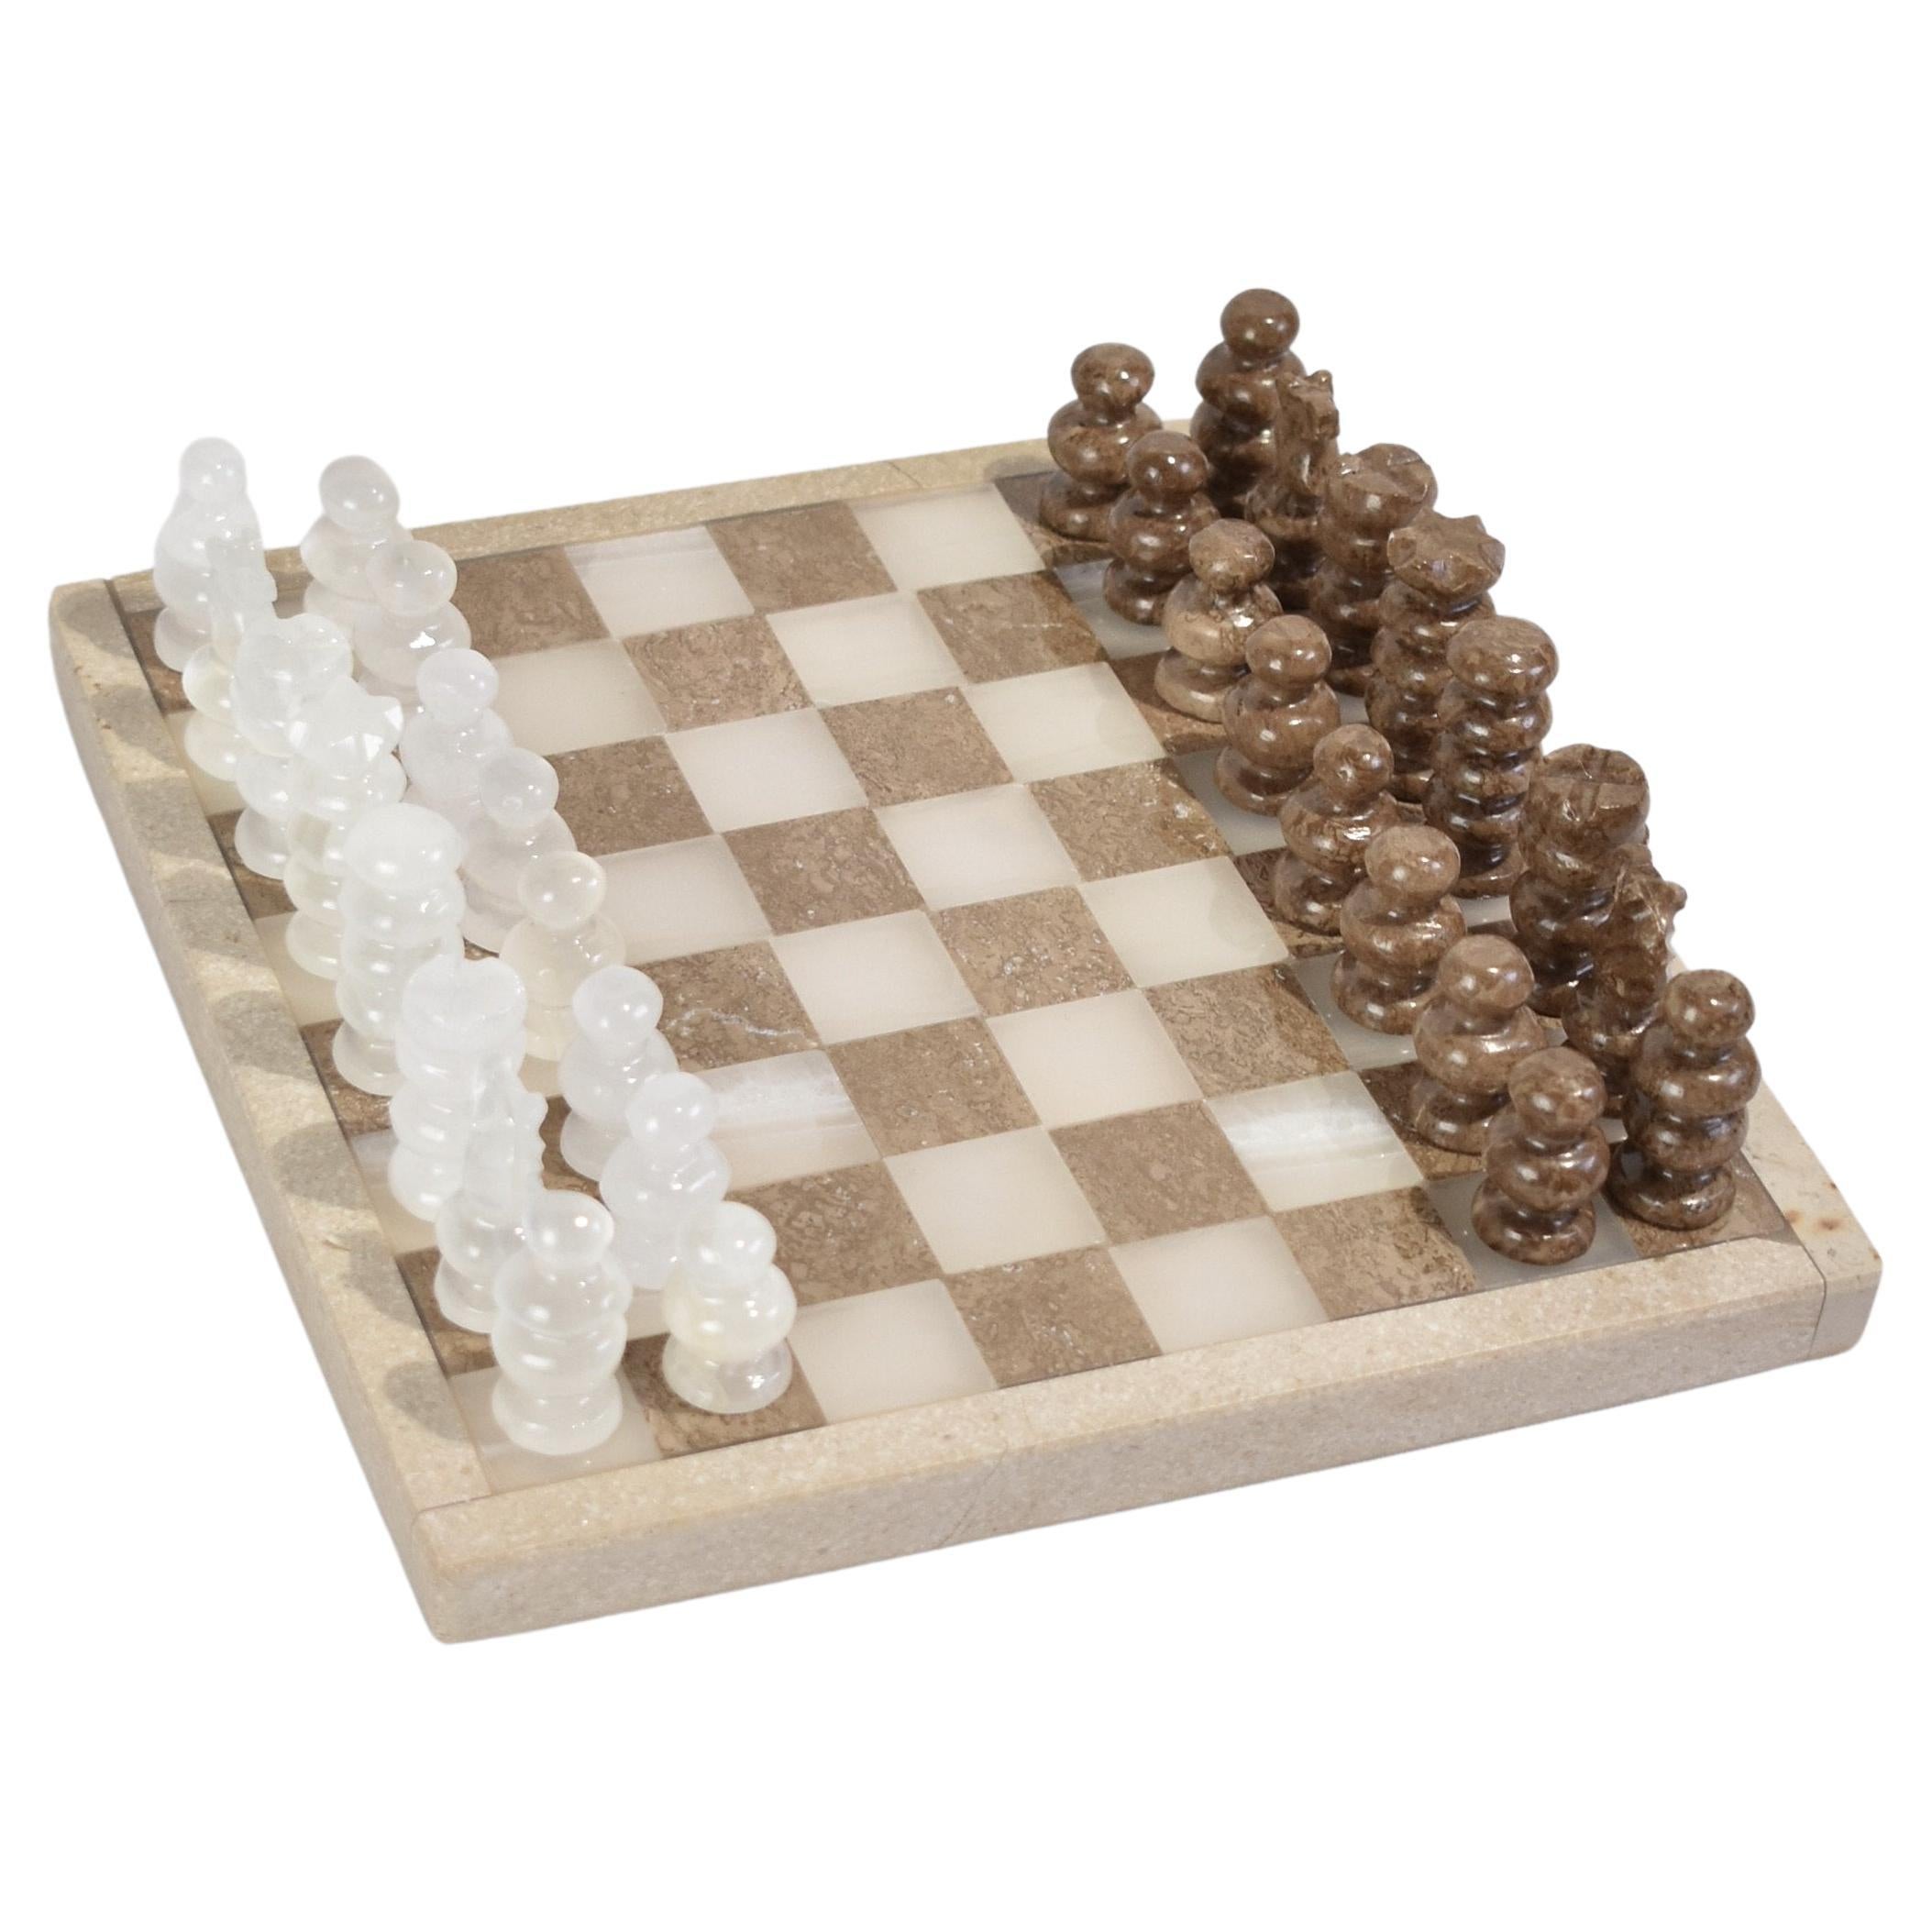 Travel Size Chess Set